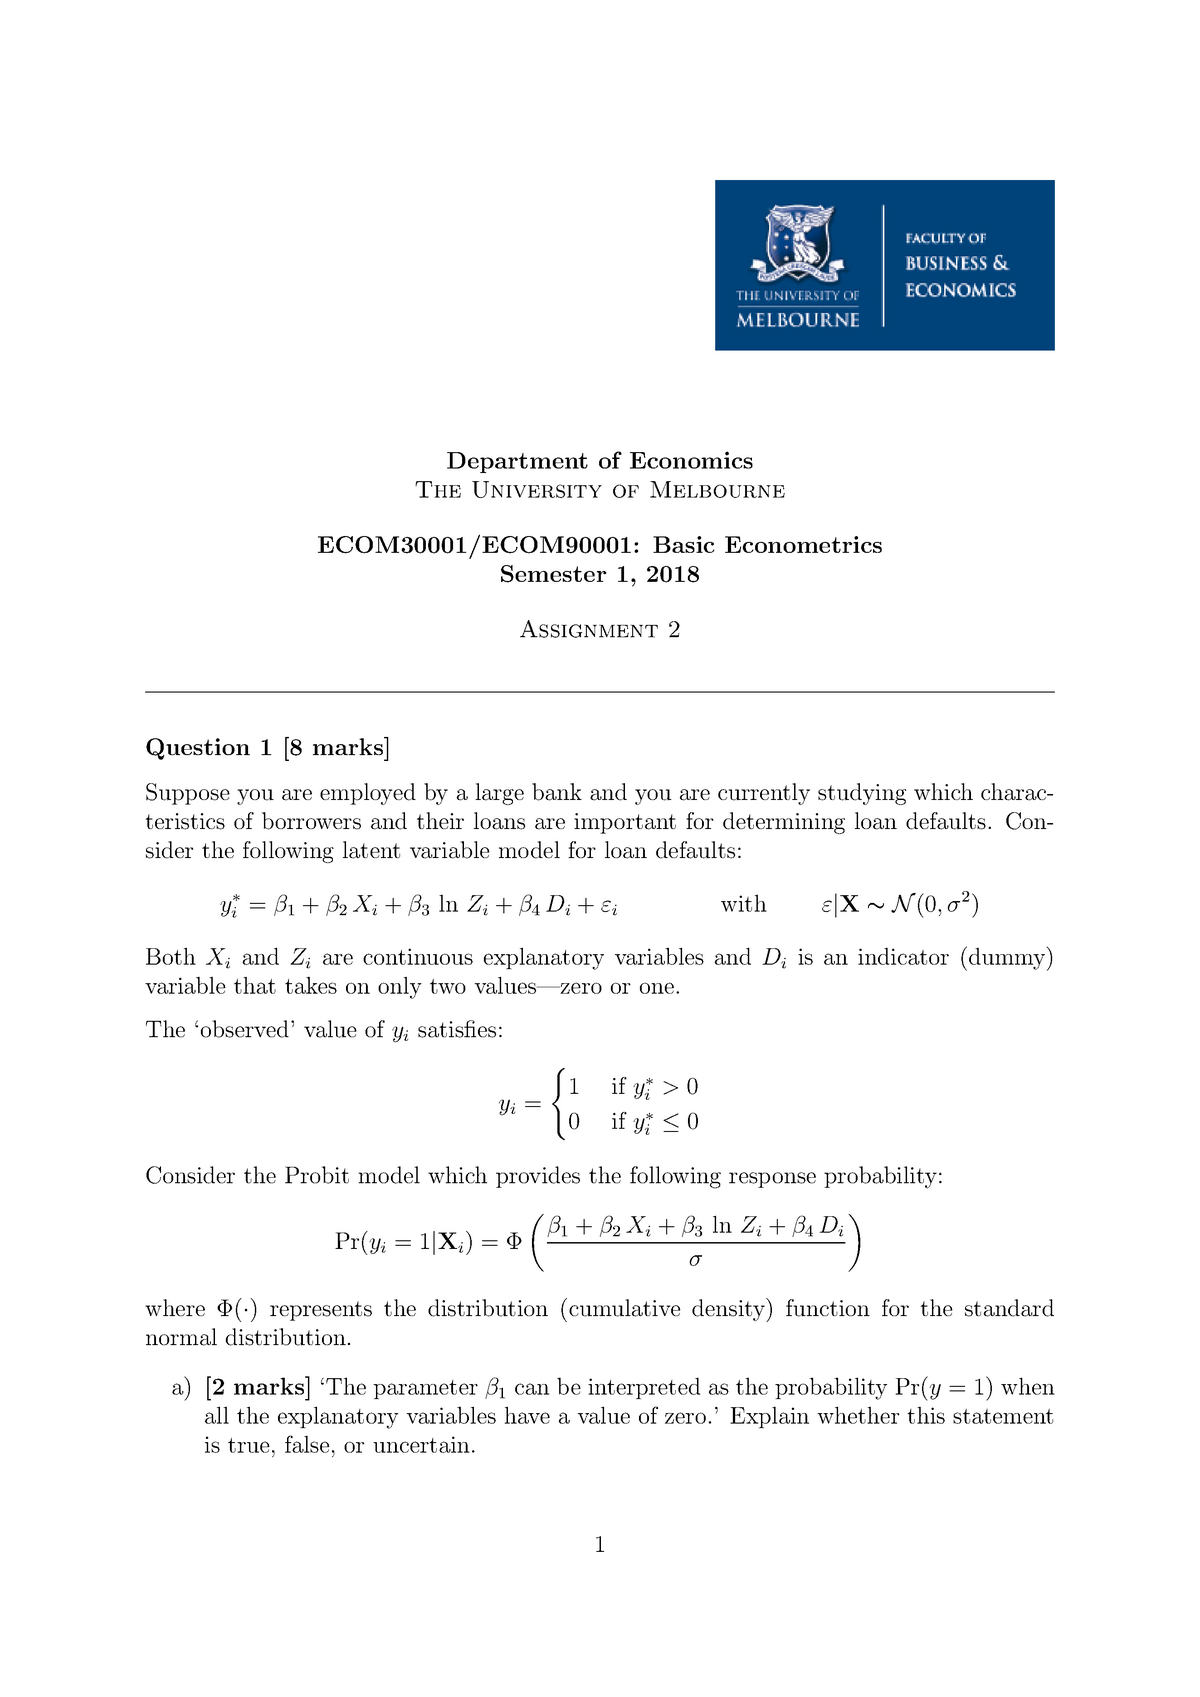 basic econometrics assignment